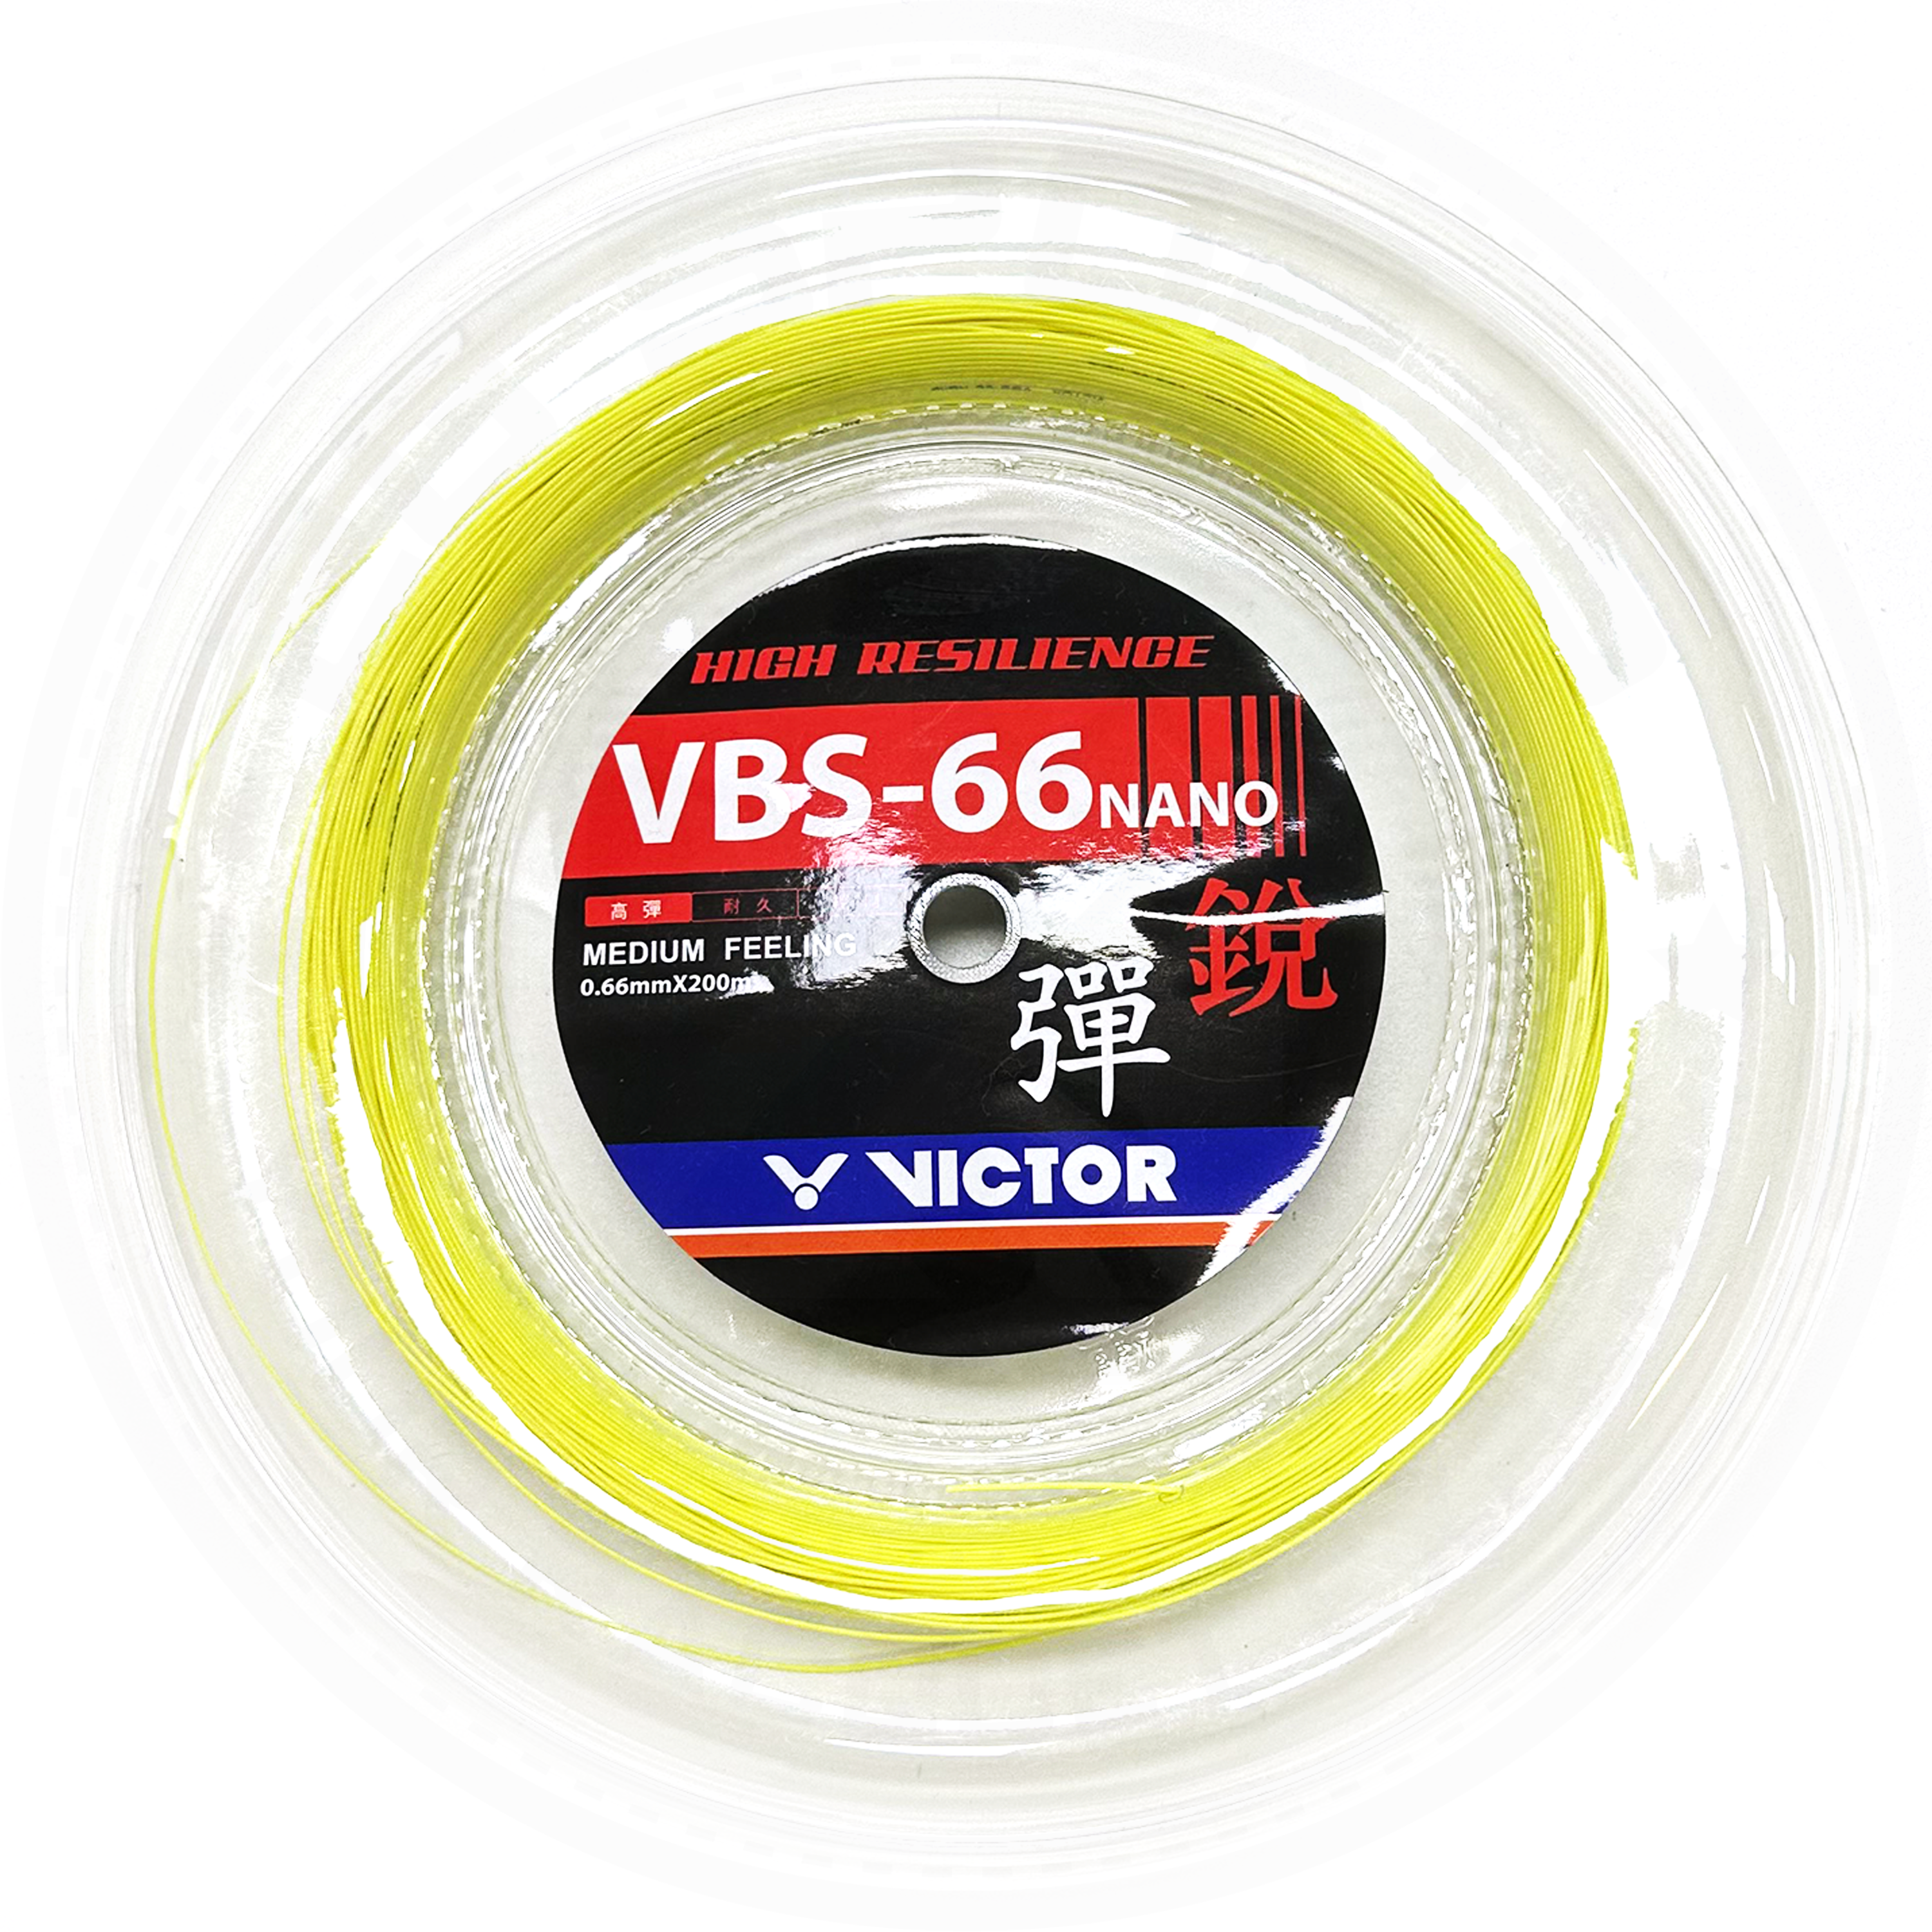 Victor VBS-66 Nano Badminton String (Blue)